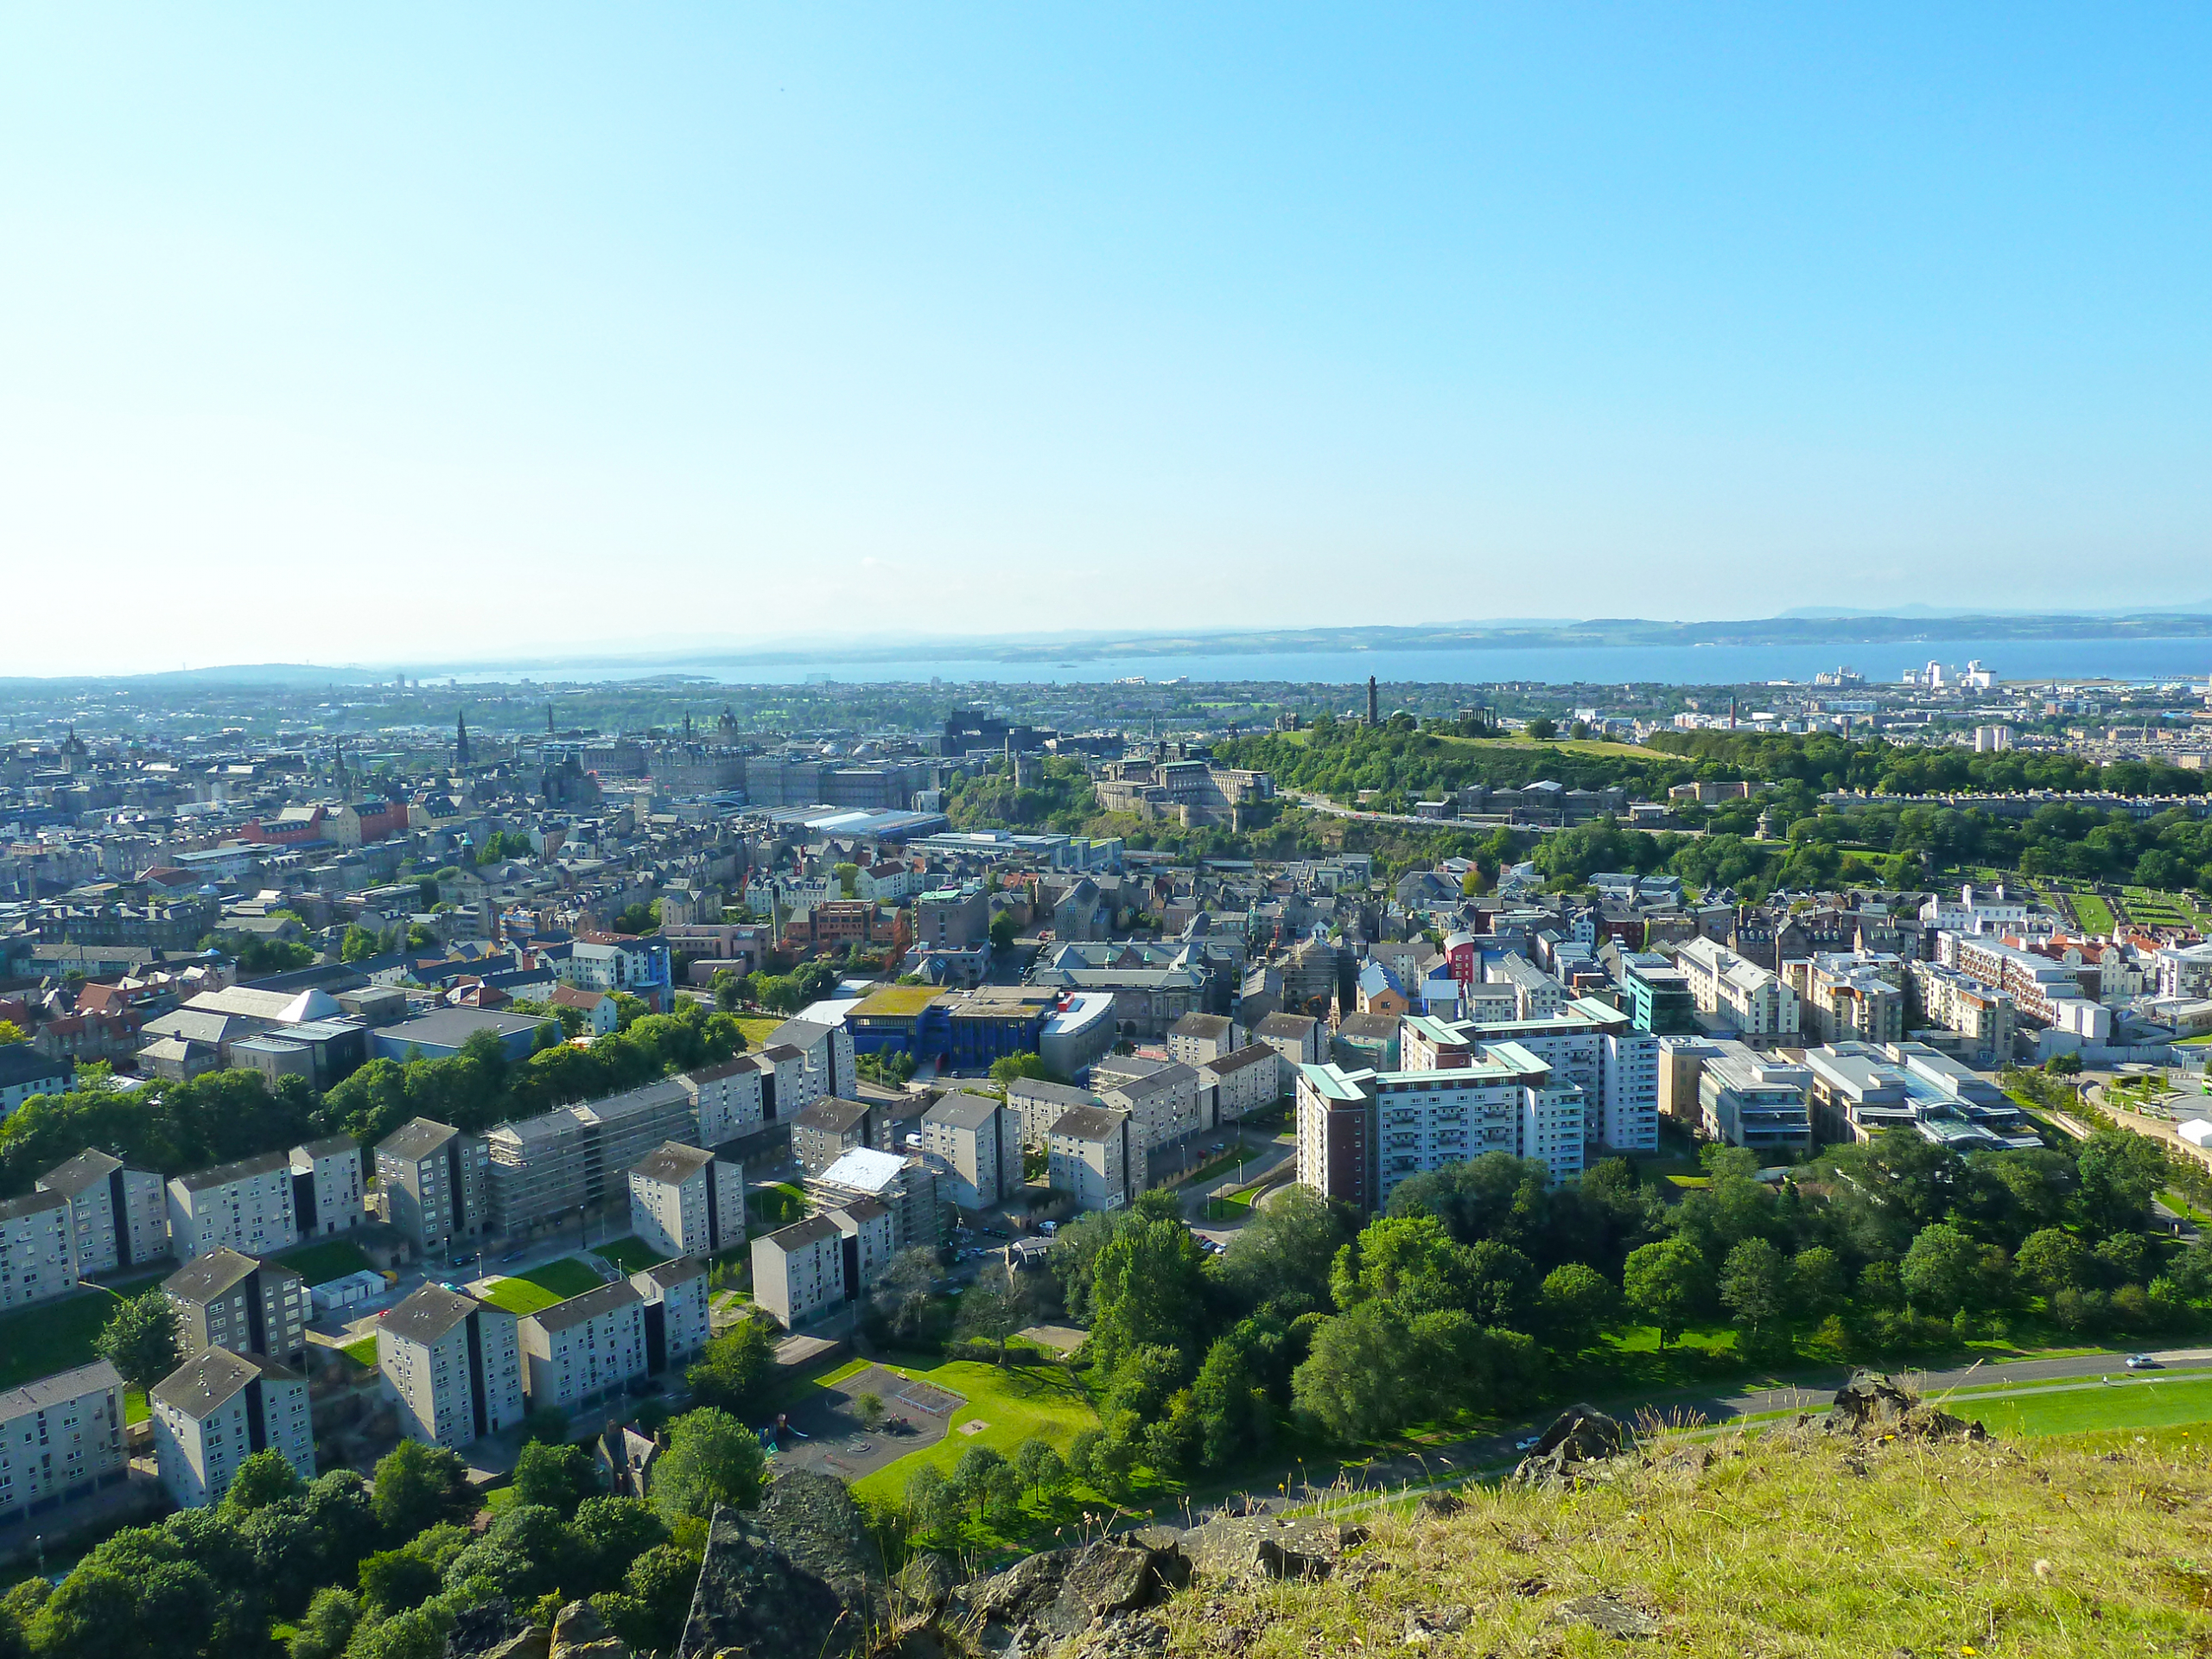 View overlooking Edinburgh from a hilltop